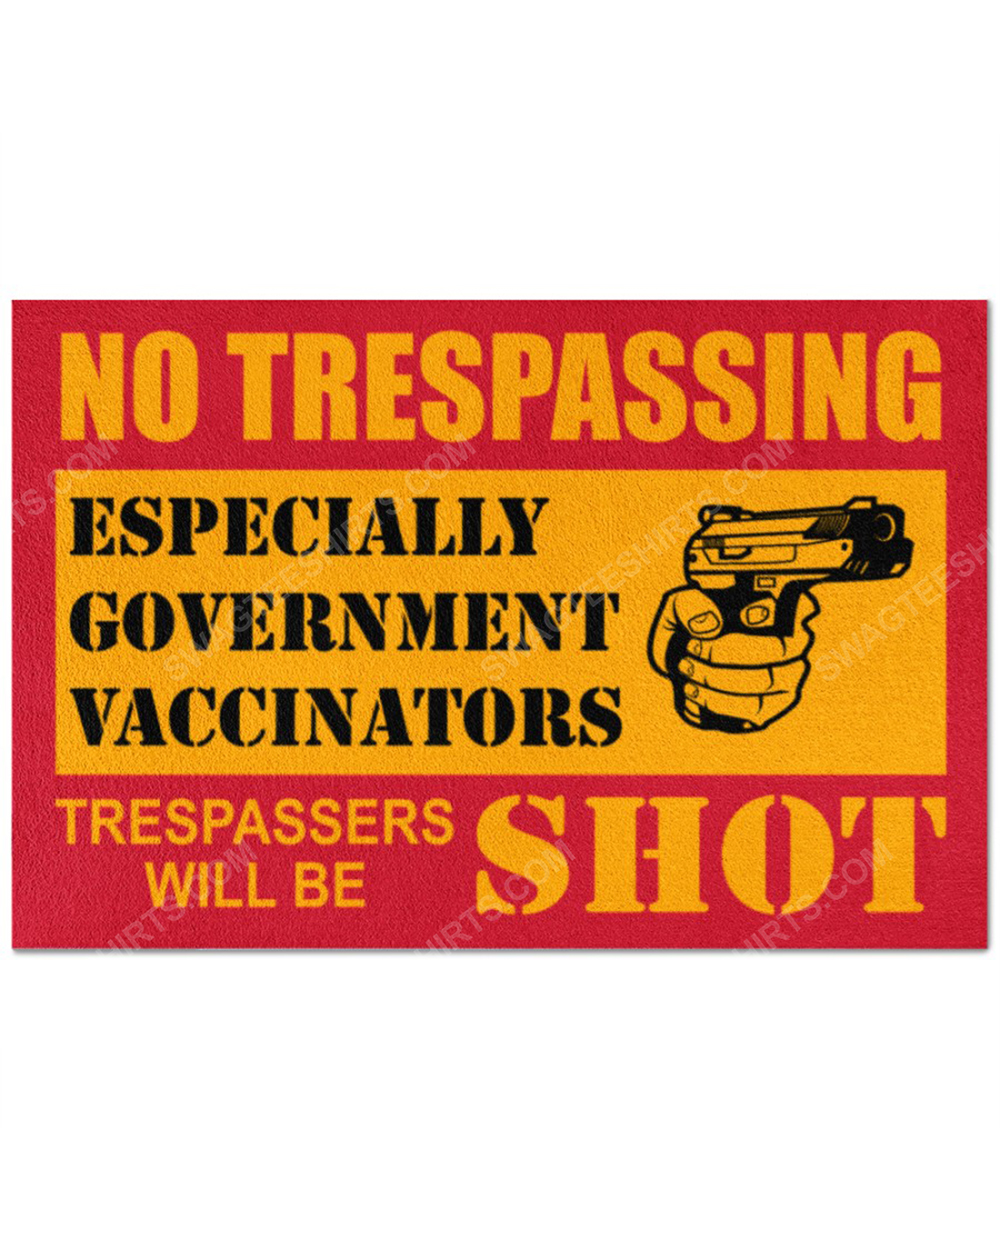 No trespassing especially government vaccinators doormat